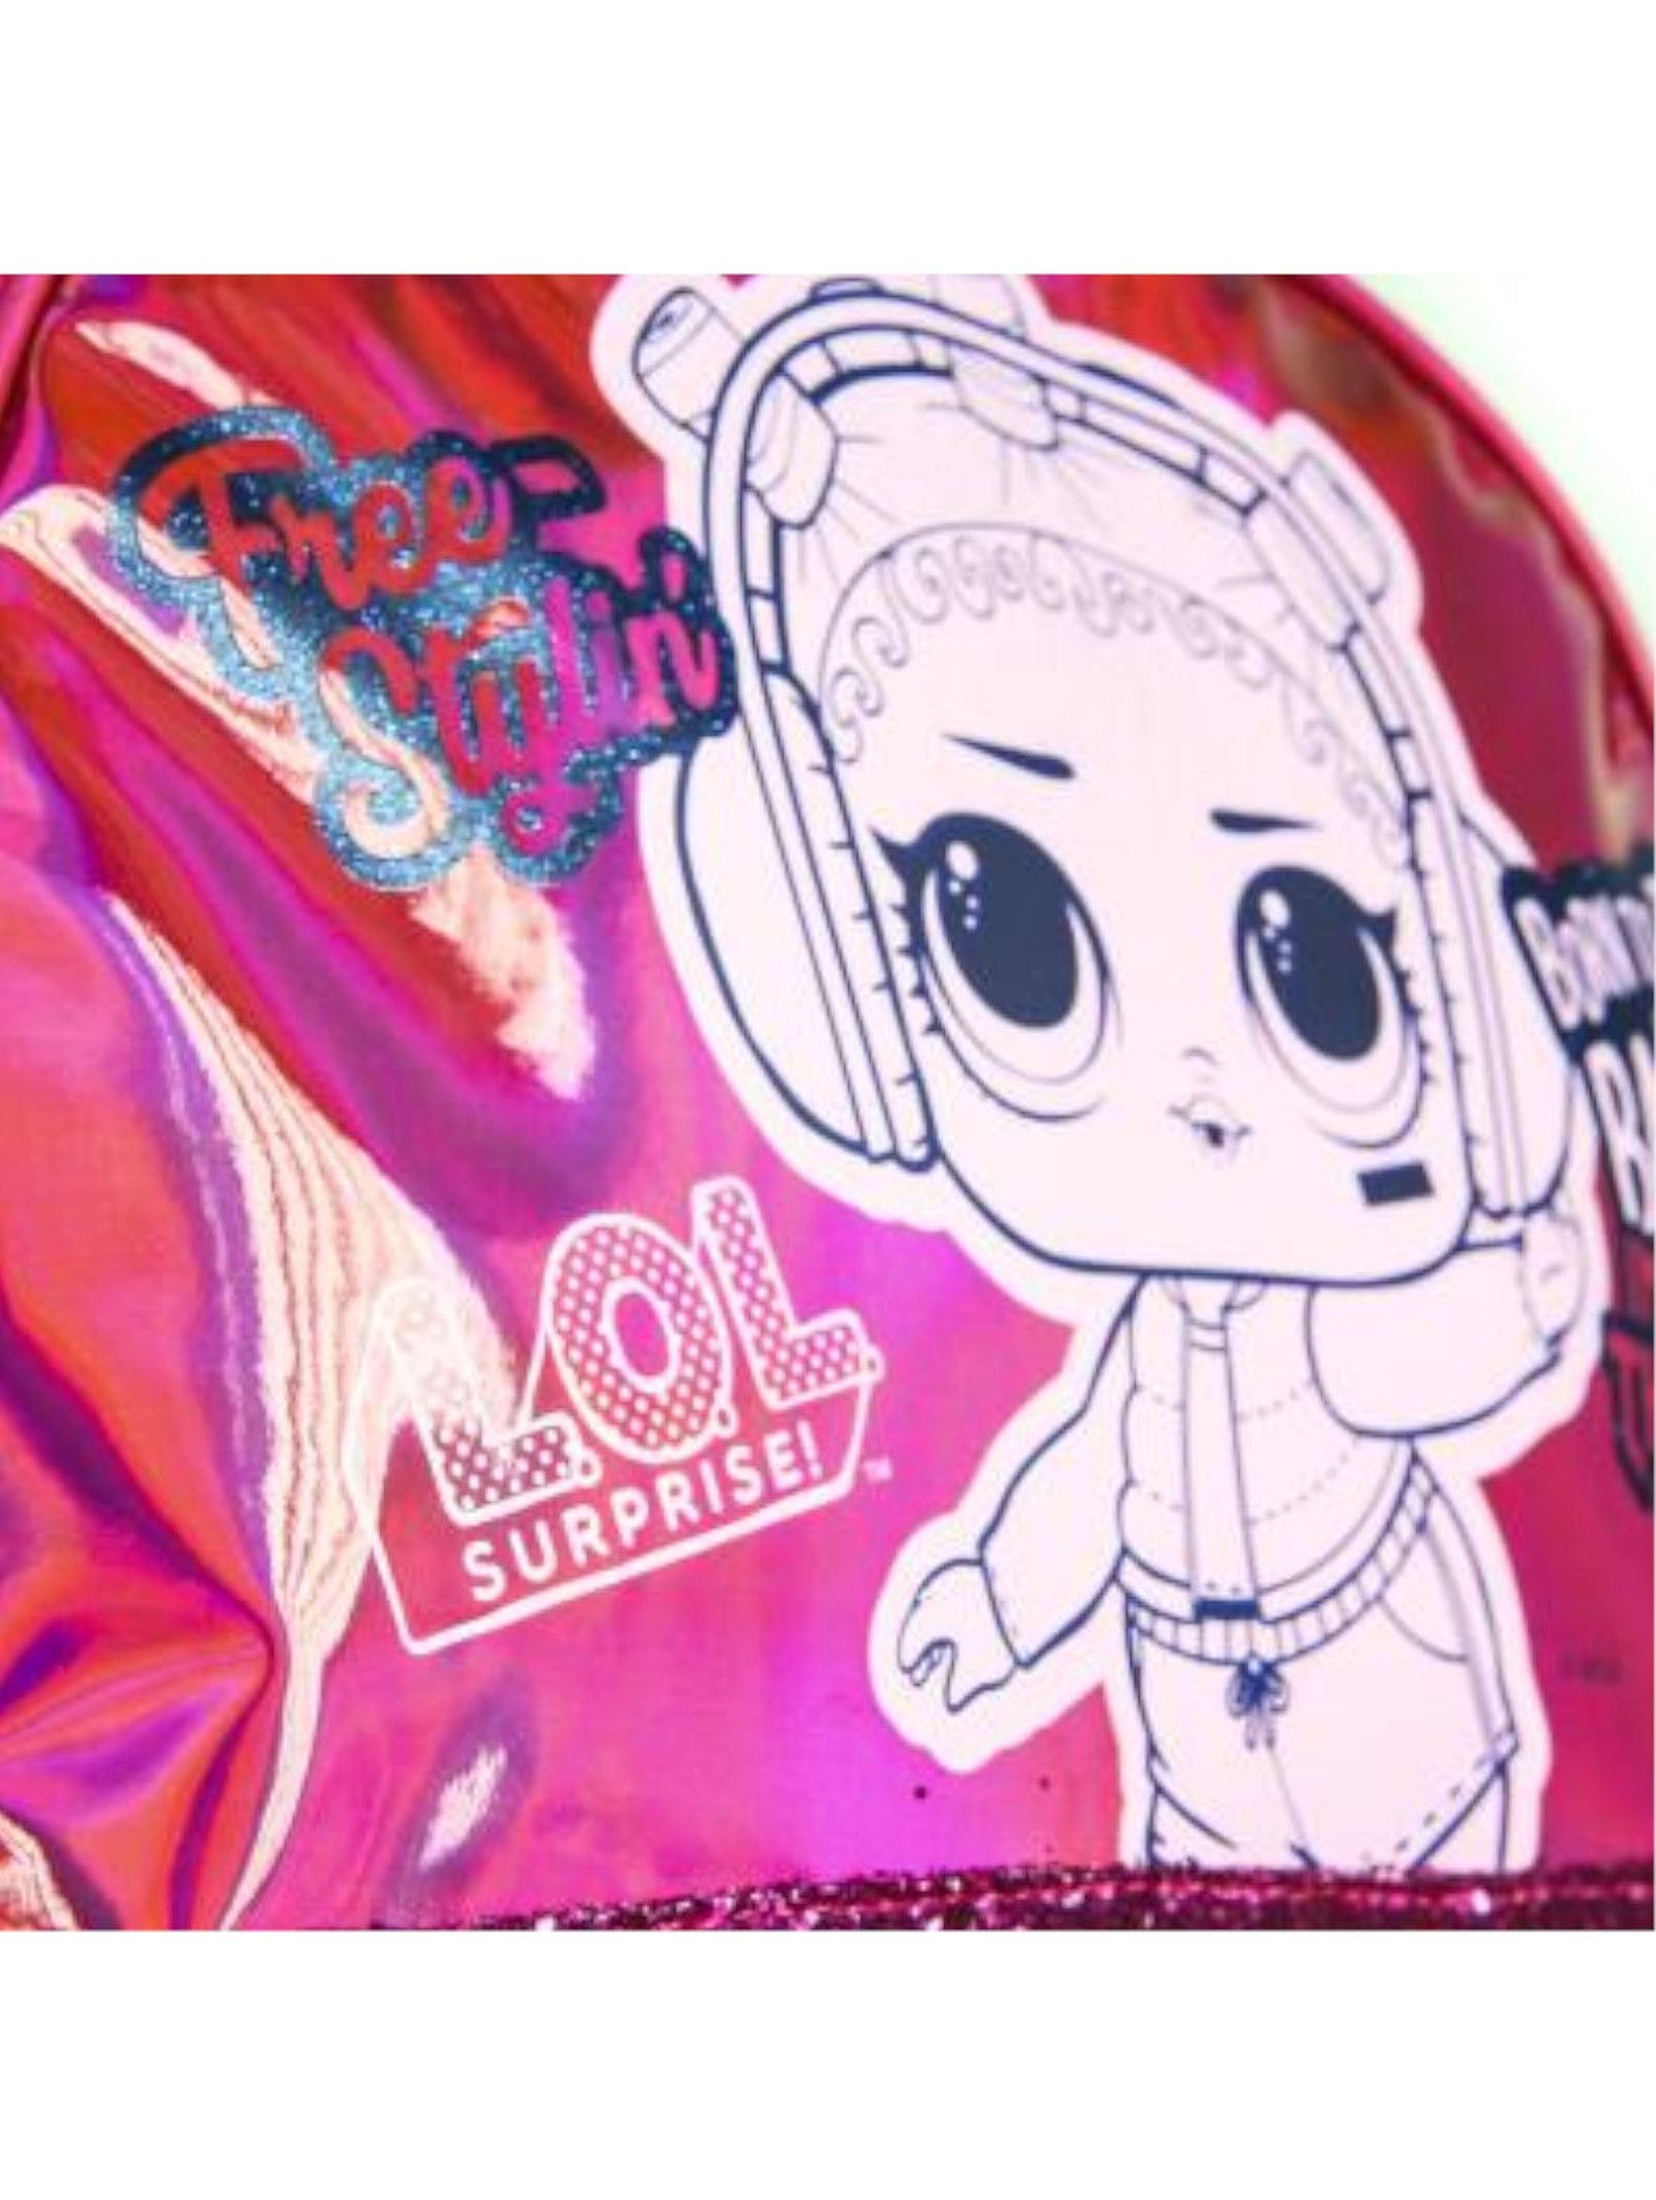 Plecak Fashion LOL Surprice- różowy